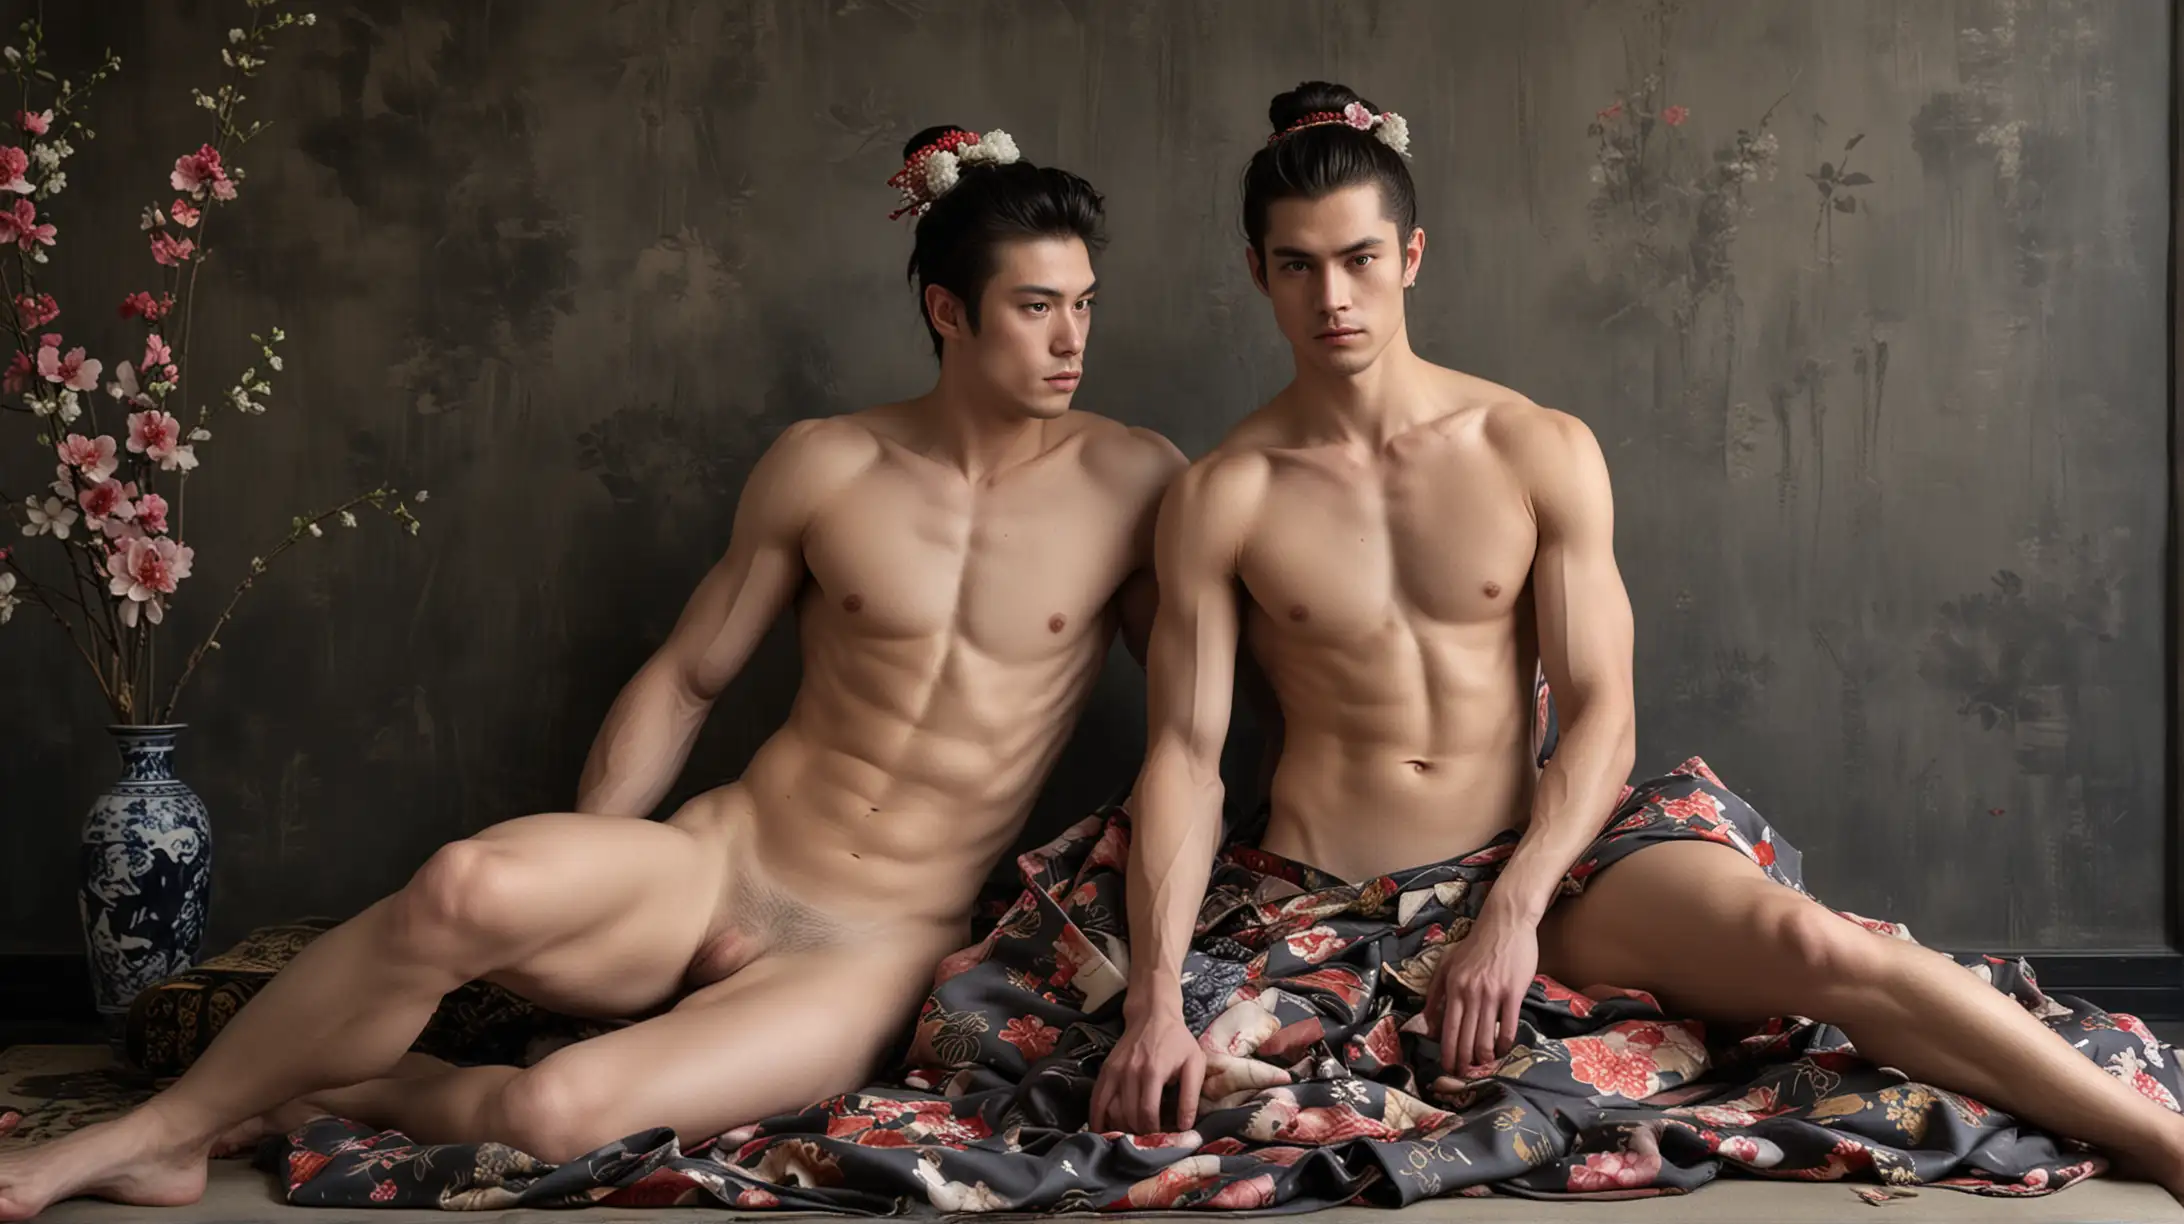 Intimate Portrait European Men Embrace in Geishainspired Setting